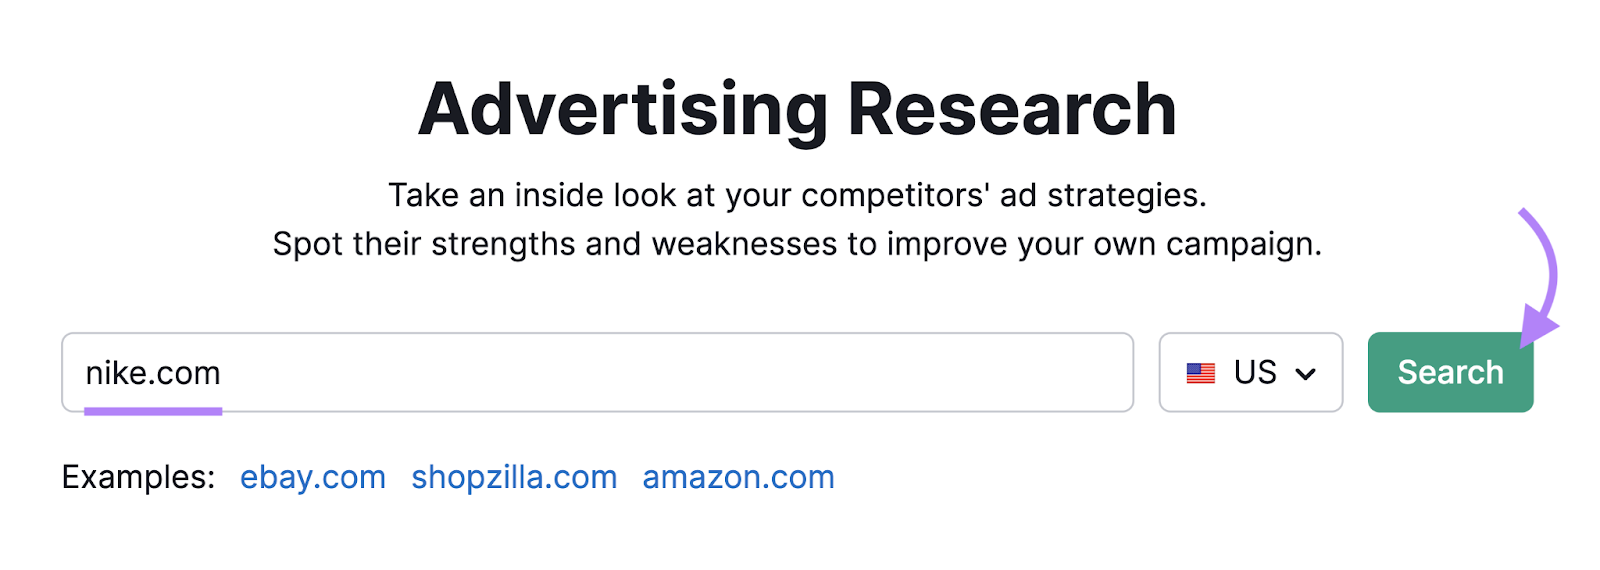 searching nike.com in Semrush's advertising research tool